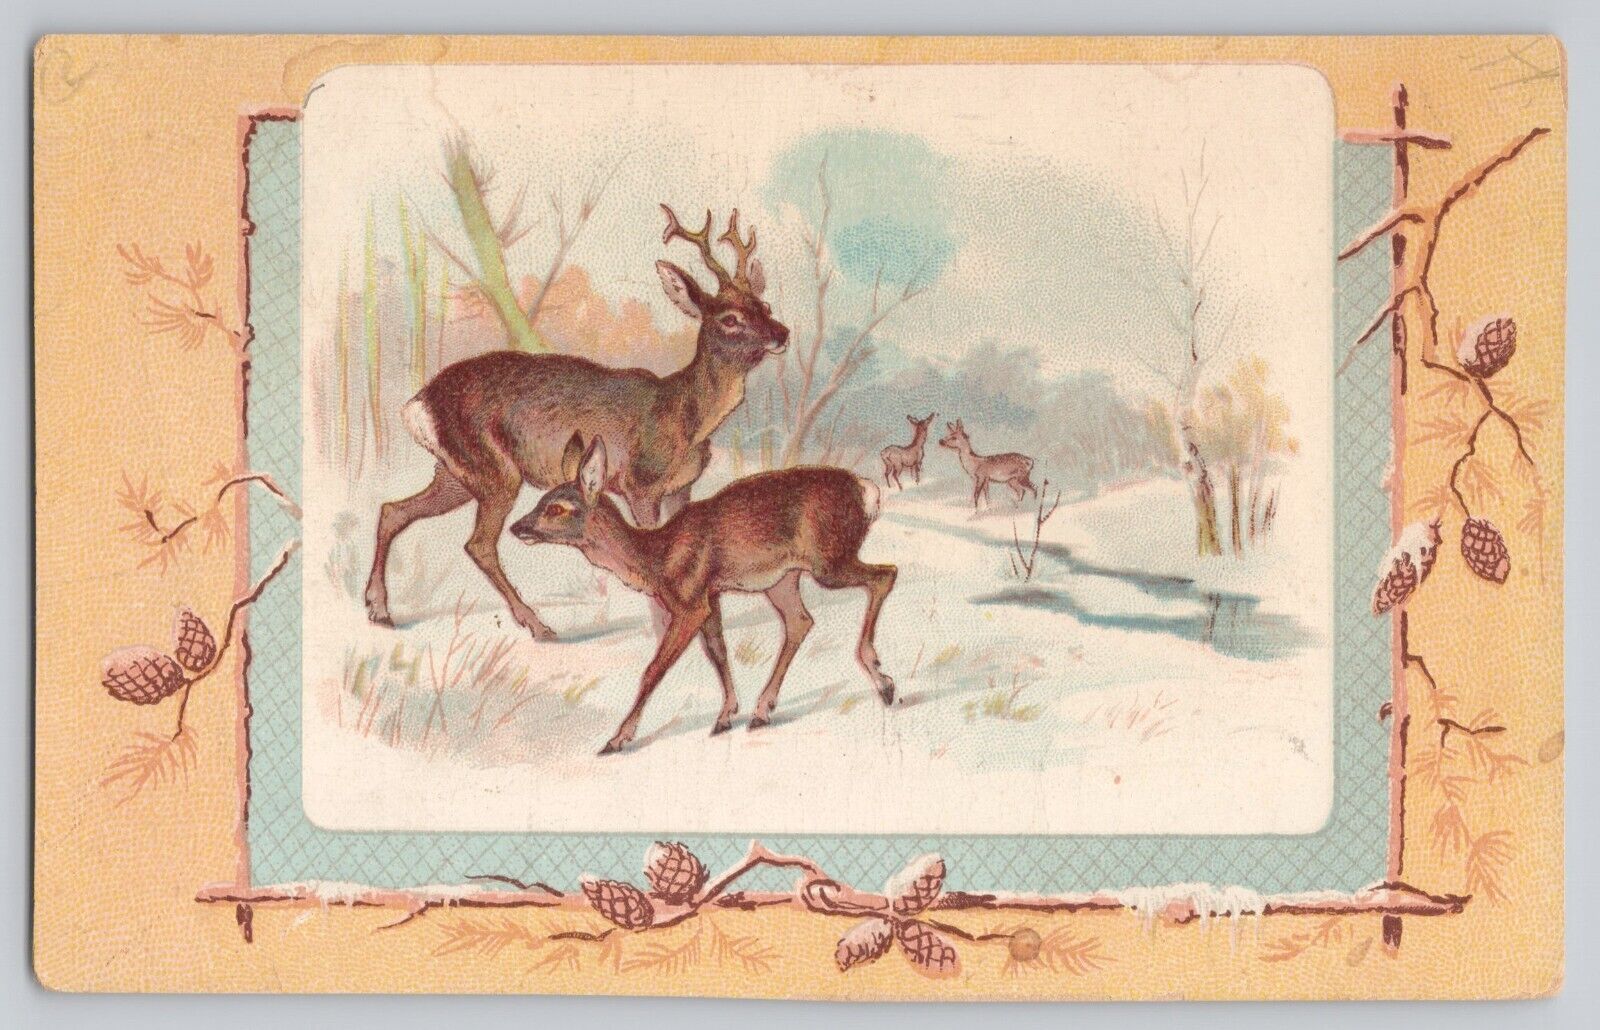 Fleischmann Co Yeast Bread Advertising Trade Card Postcard NY Winter Scene Deer